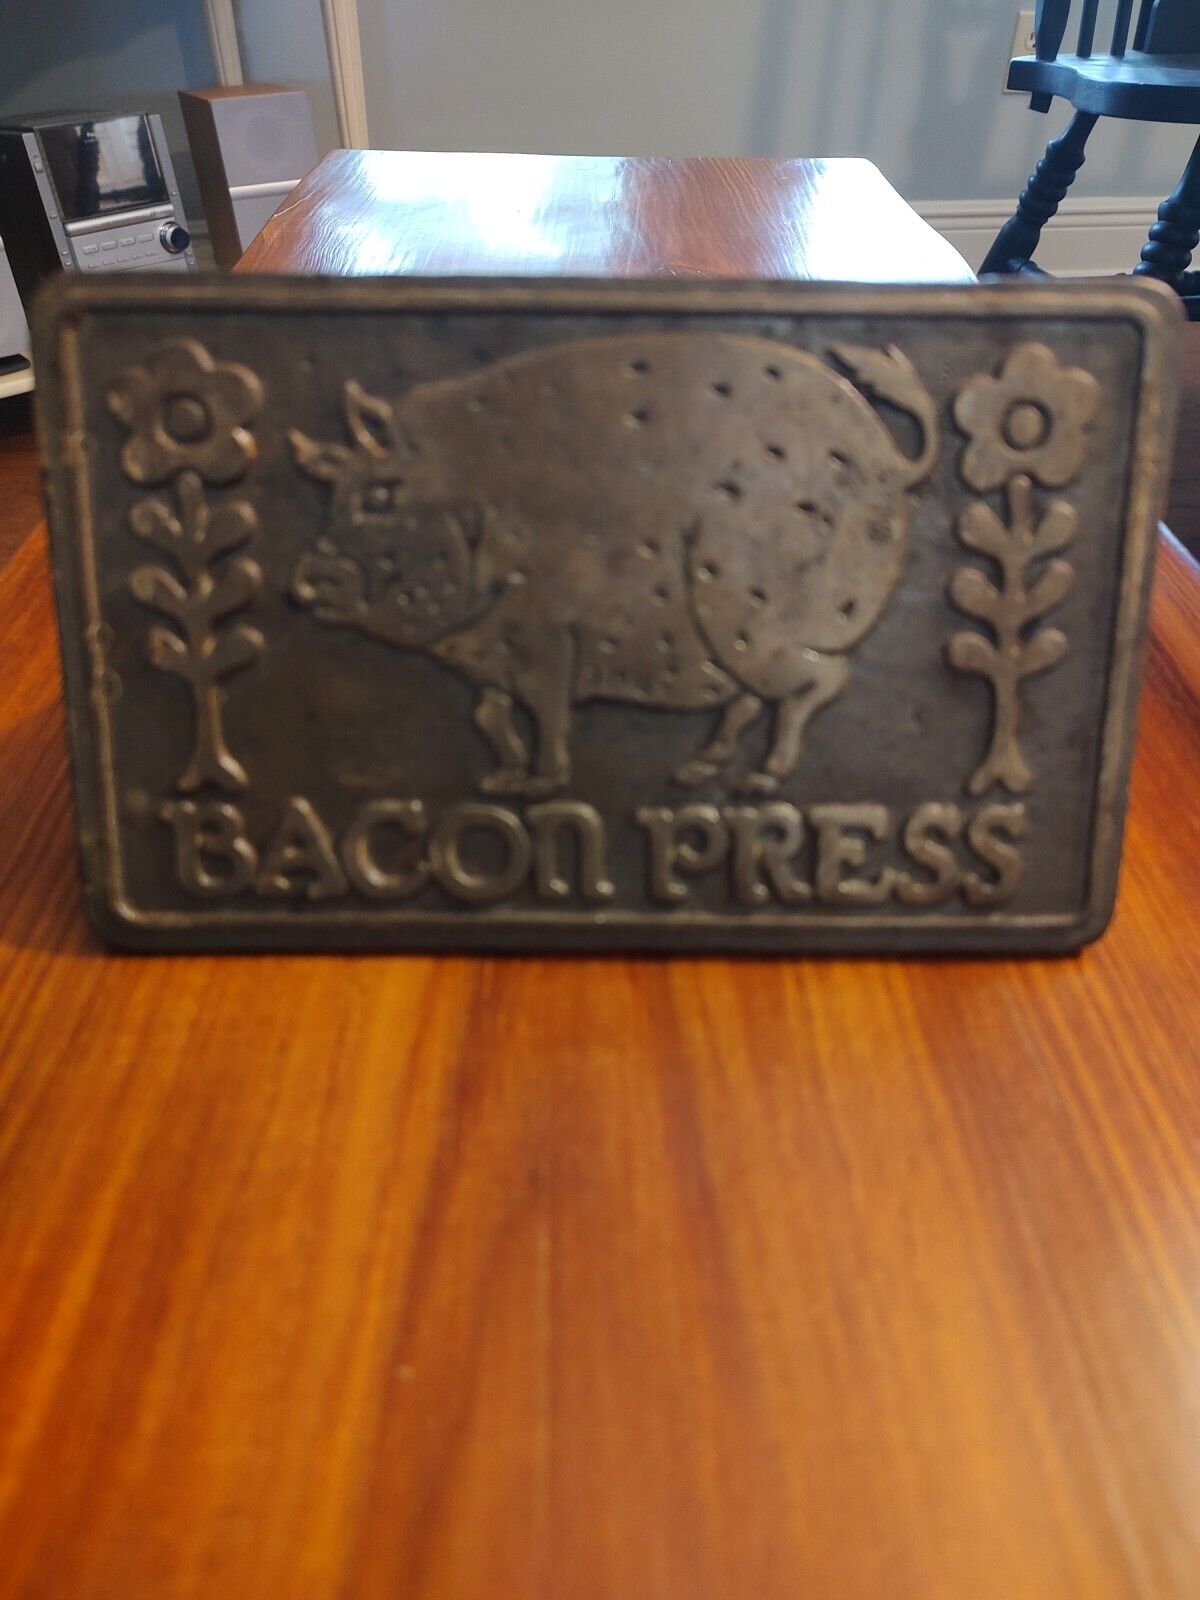 bacon press cast iron pig